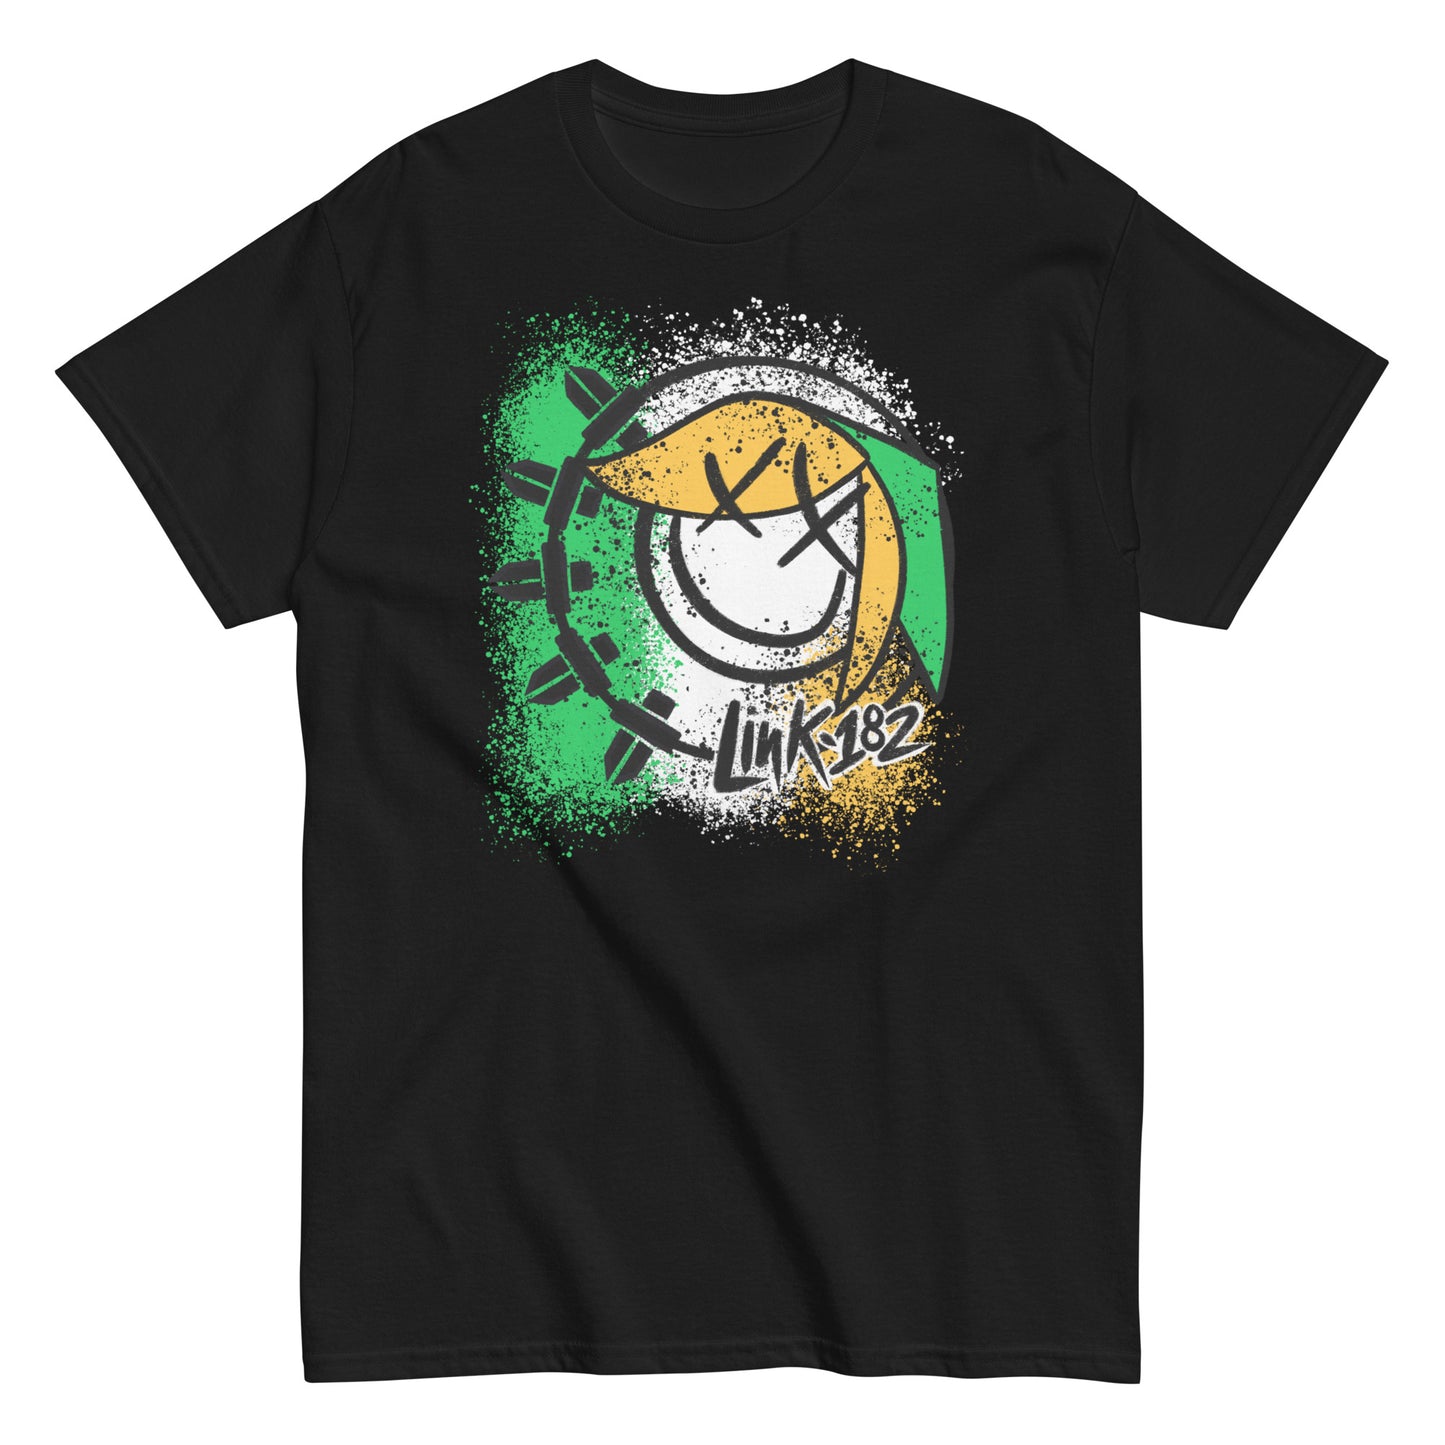 Link 182 - The Legend of Zelda and Pop Punk Mash Up T-Shirt for Retro Gaming Fans